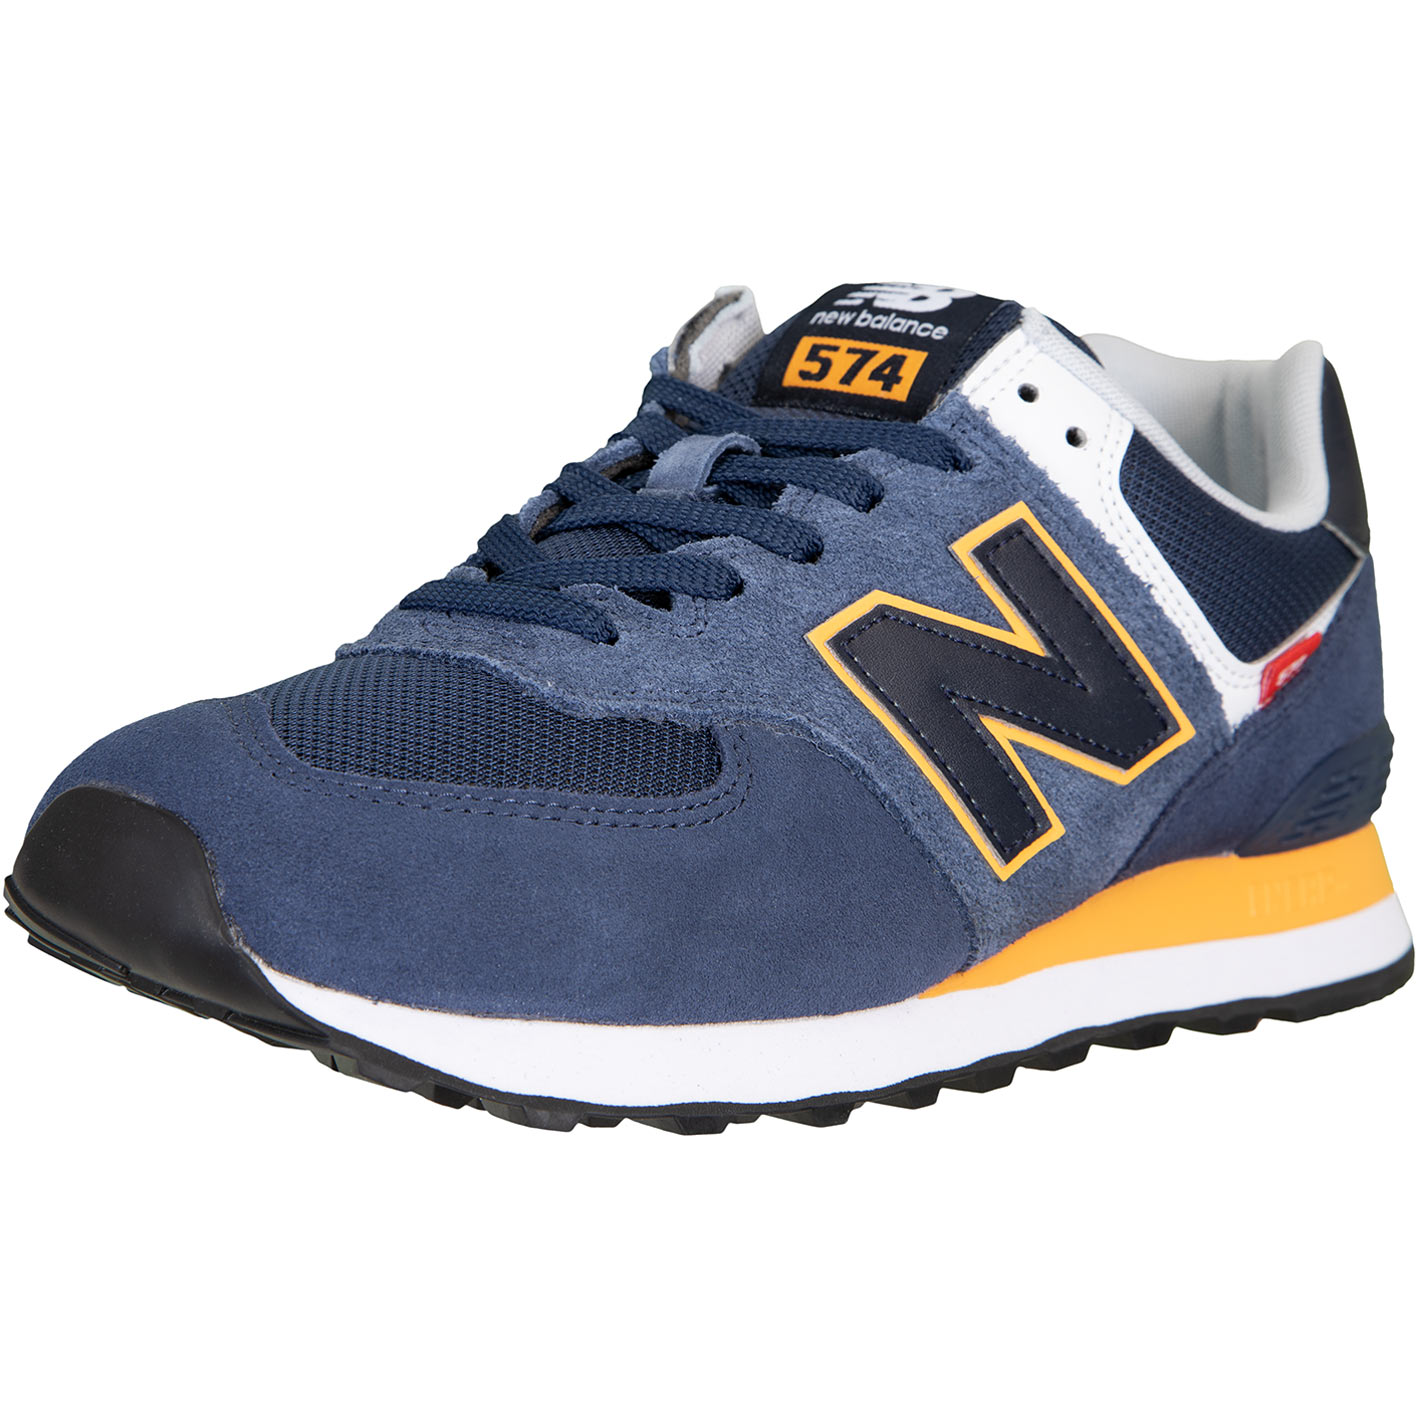 ☆ New Balance NB 574 Sneaker Schuhe navy/orange - hier bestellen!